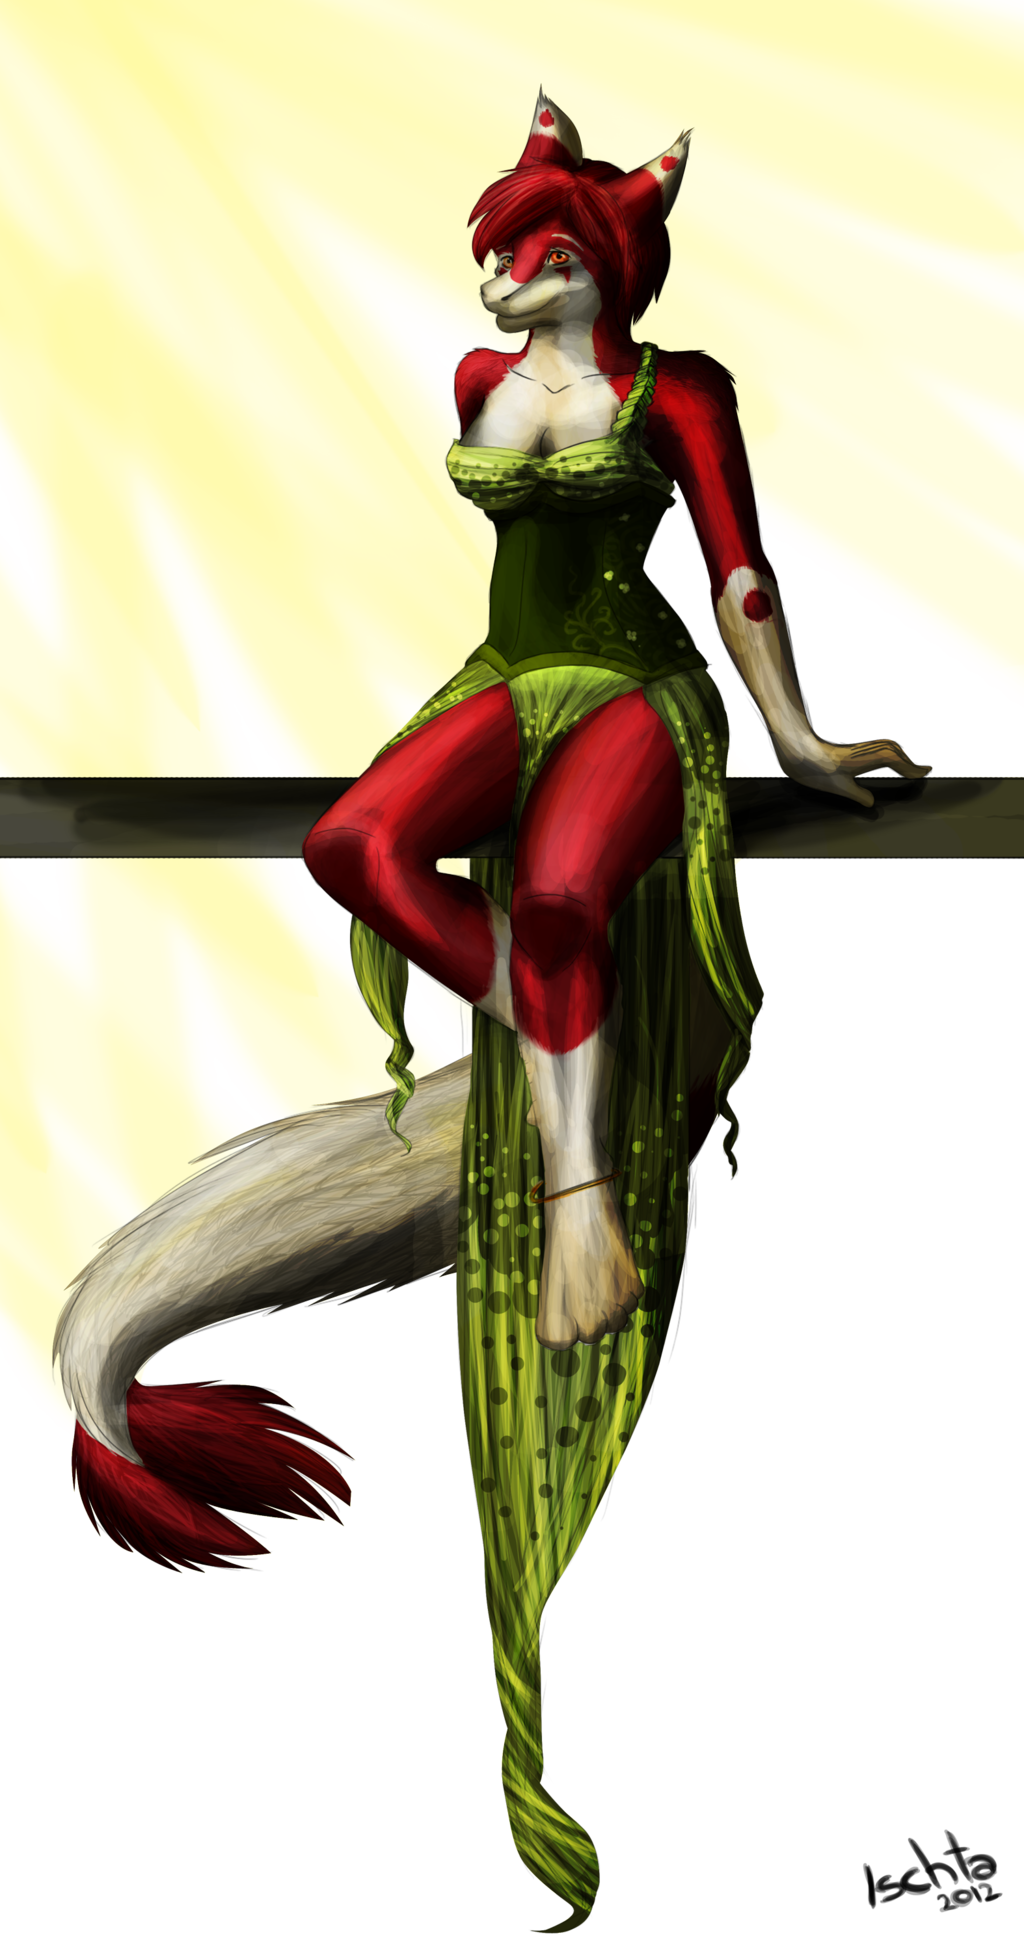 Dragonlady in green dress